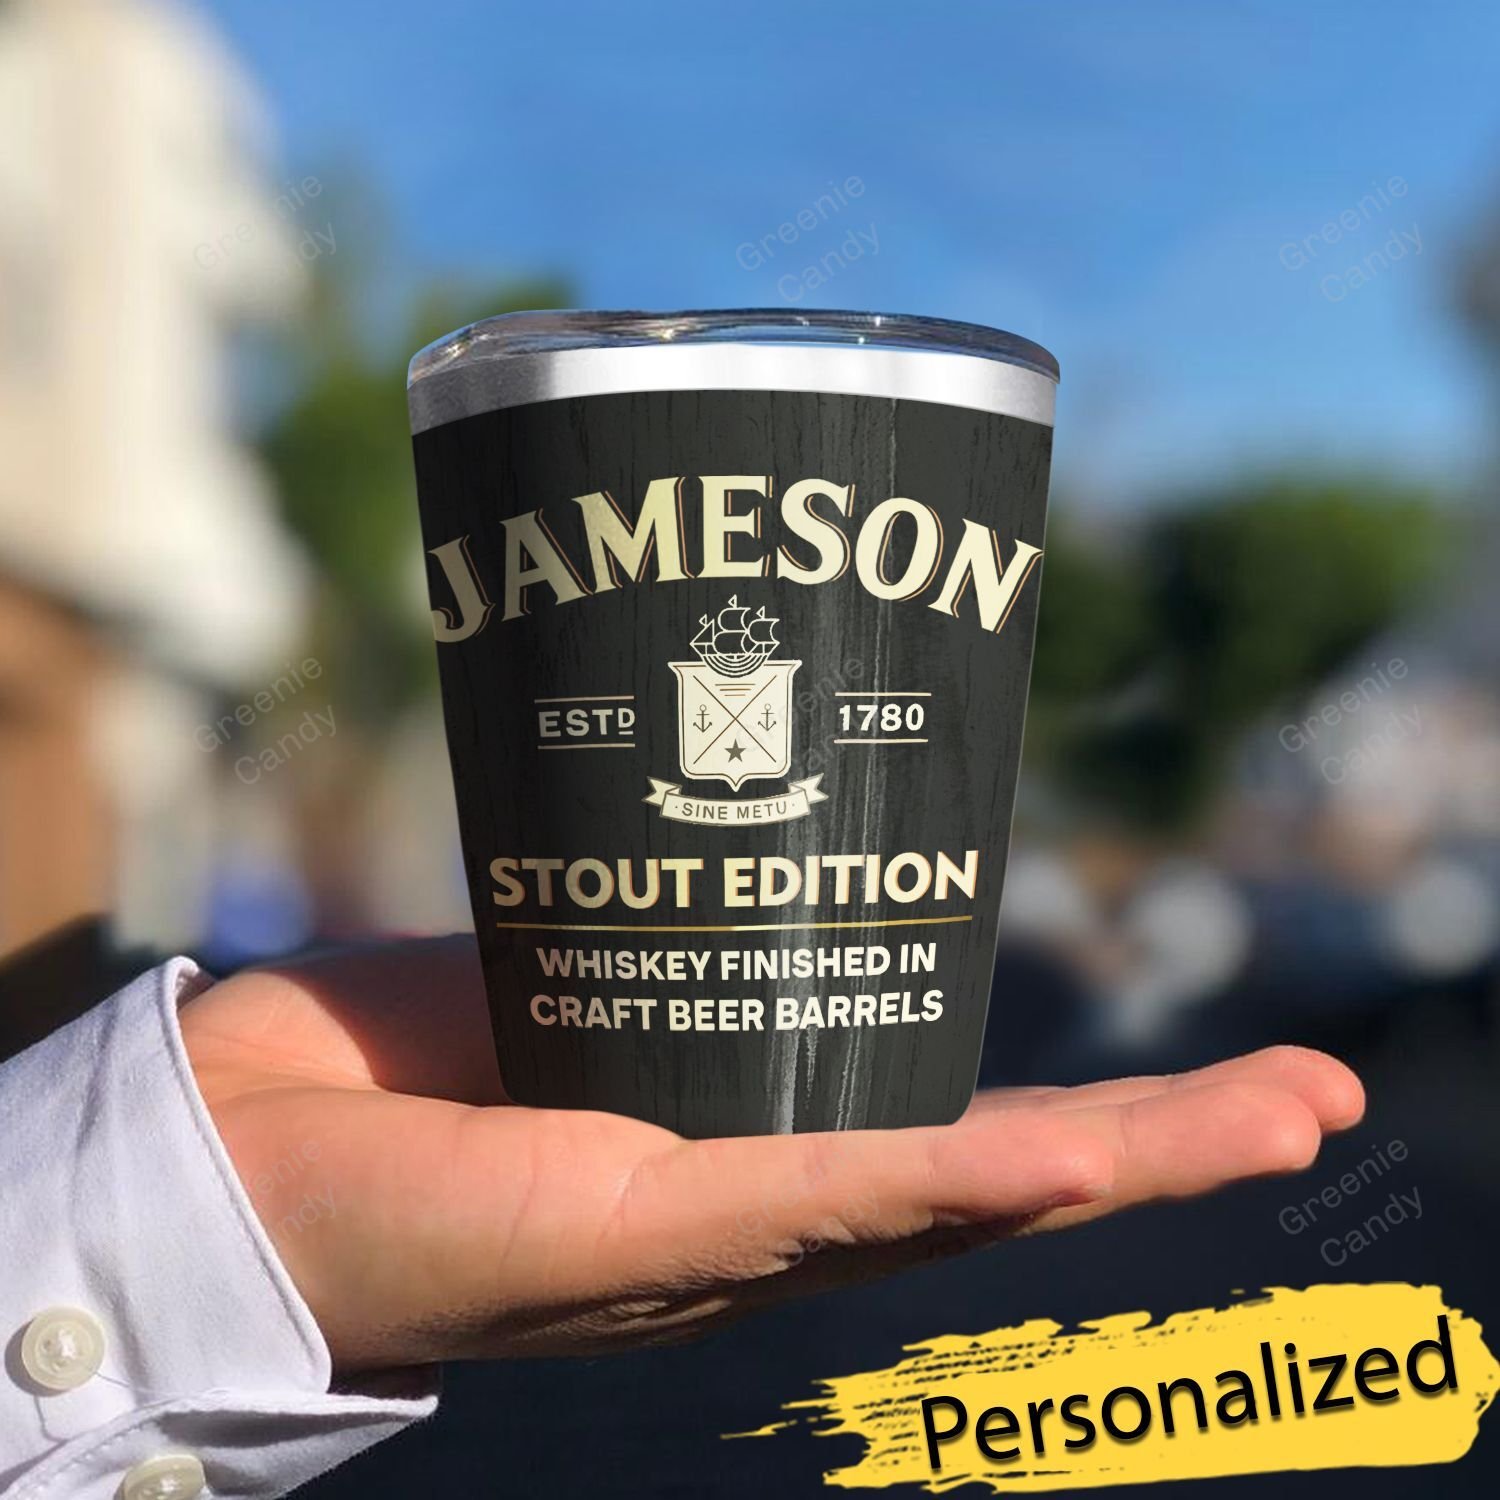 Personalized_Jameson_Stout_Edition_Whiskey_Tumbler_1